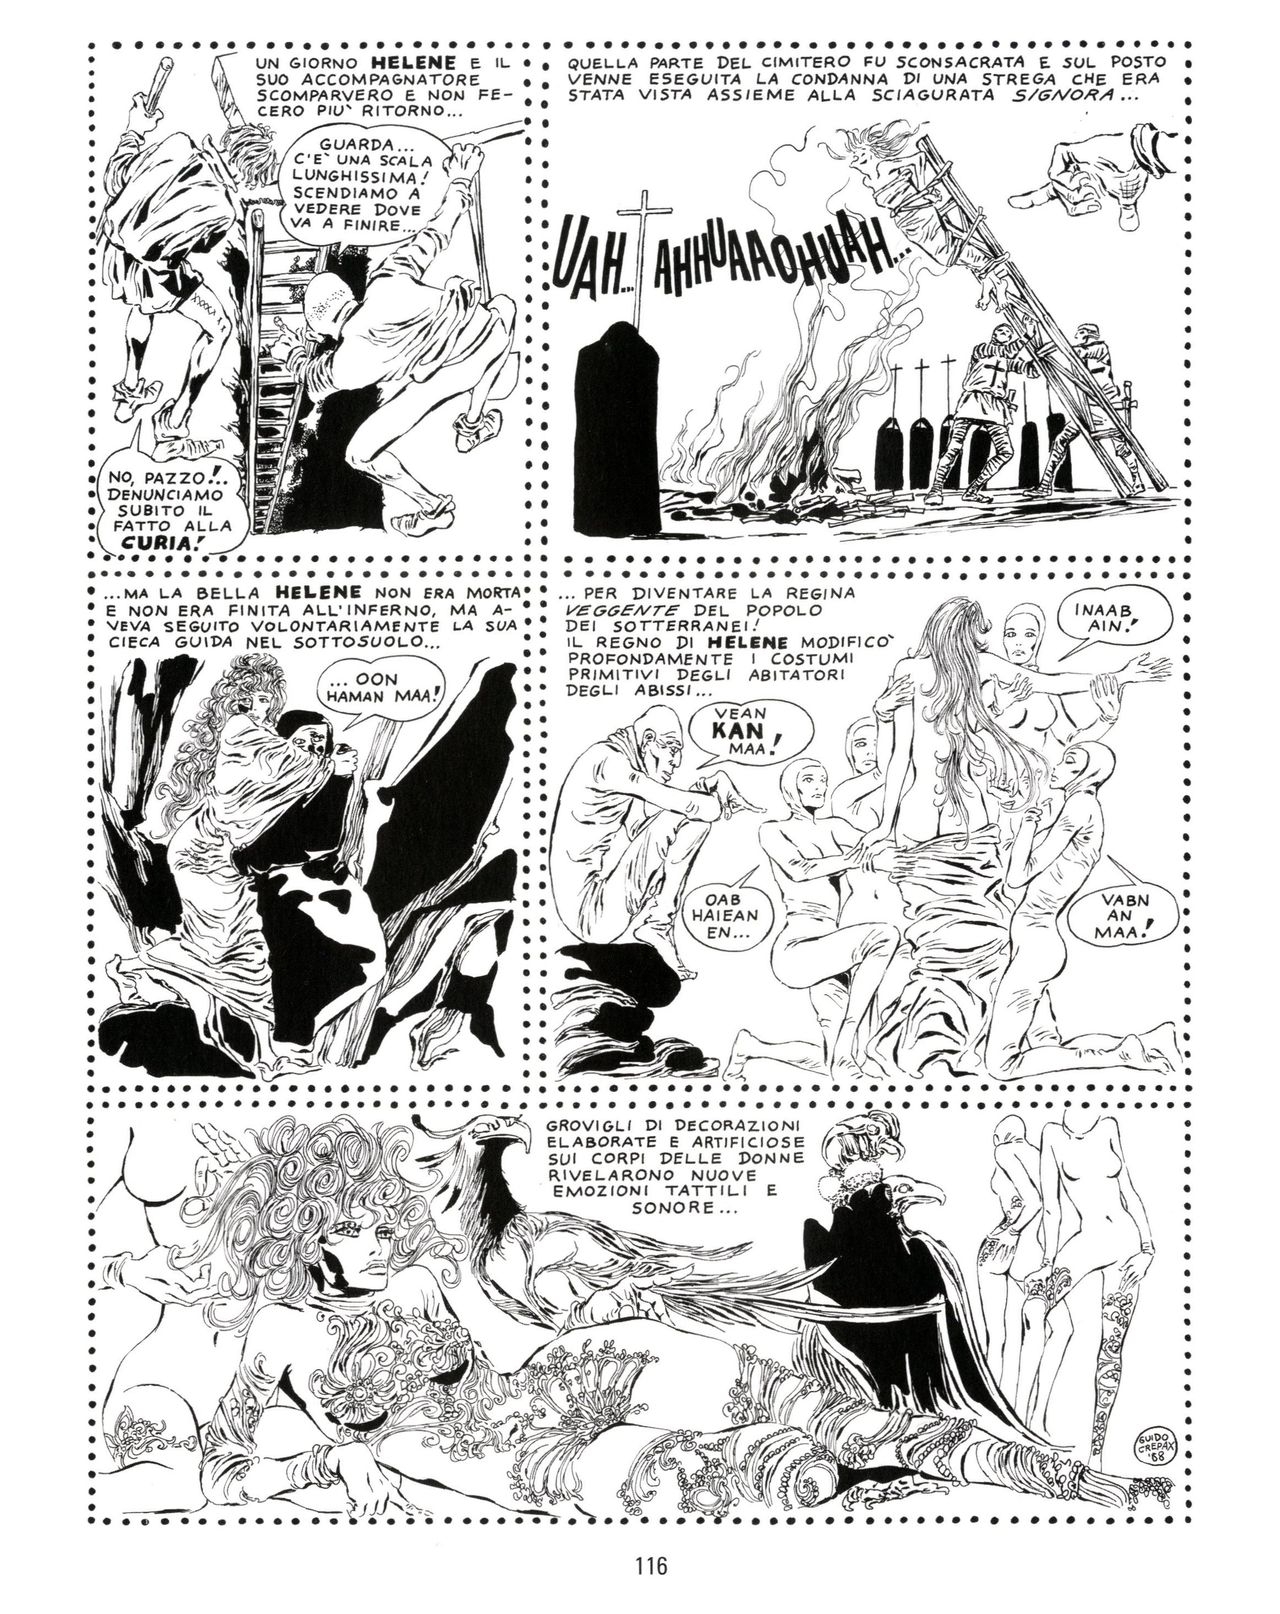 [Guido Crepax] Erotica Fumetti #25 : L'ascesa dei sotterranei : I cavalieri ciechi [Italian] 117